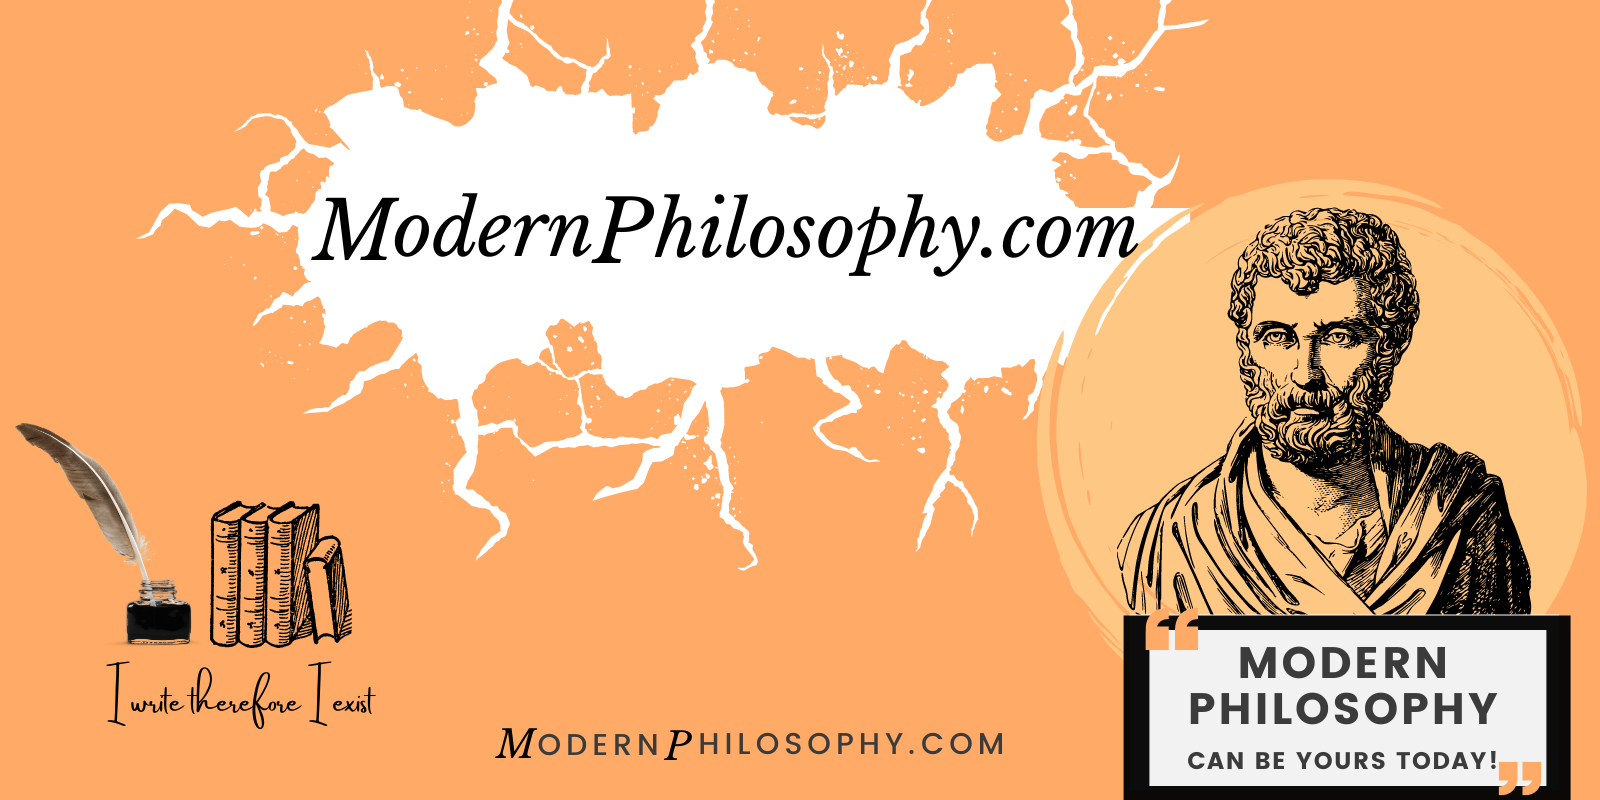 ModernPhilosophy.com